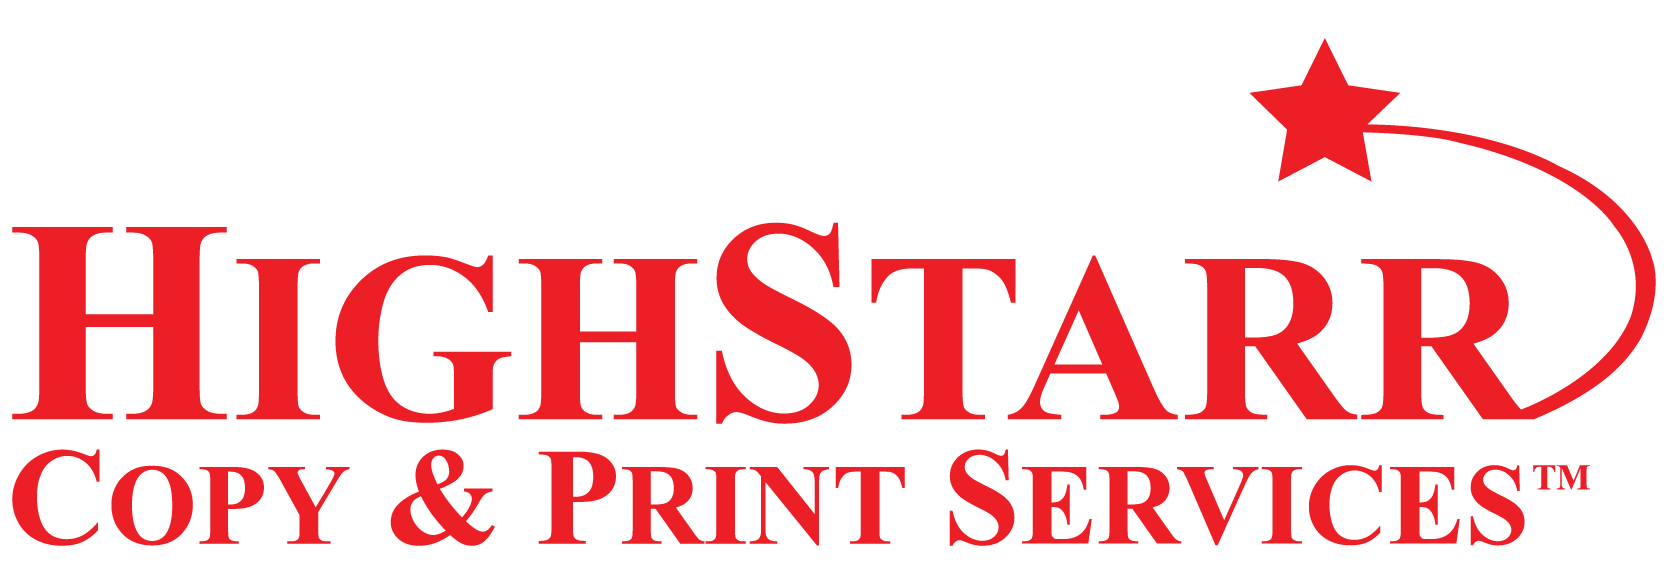 HighStarr Copy & Print Services's Logo